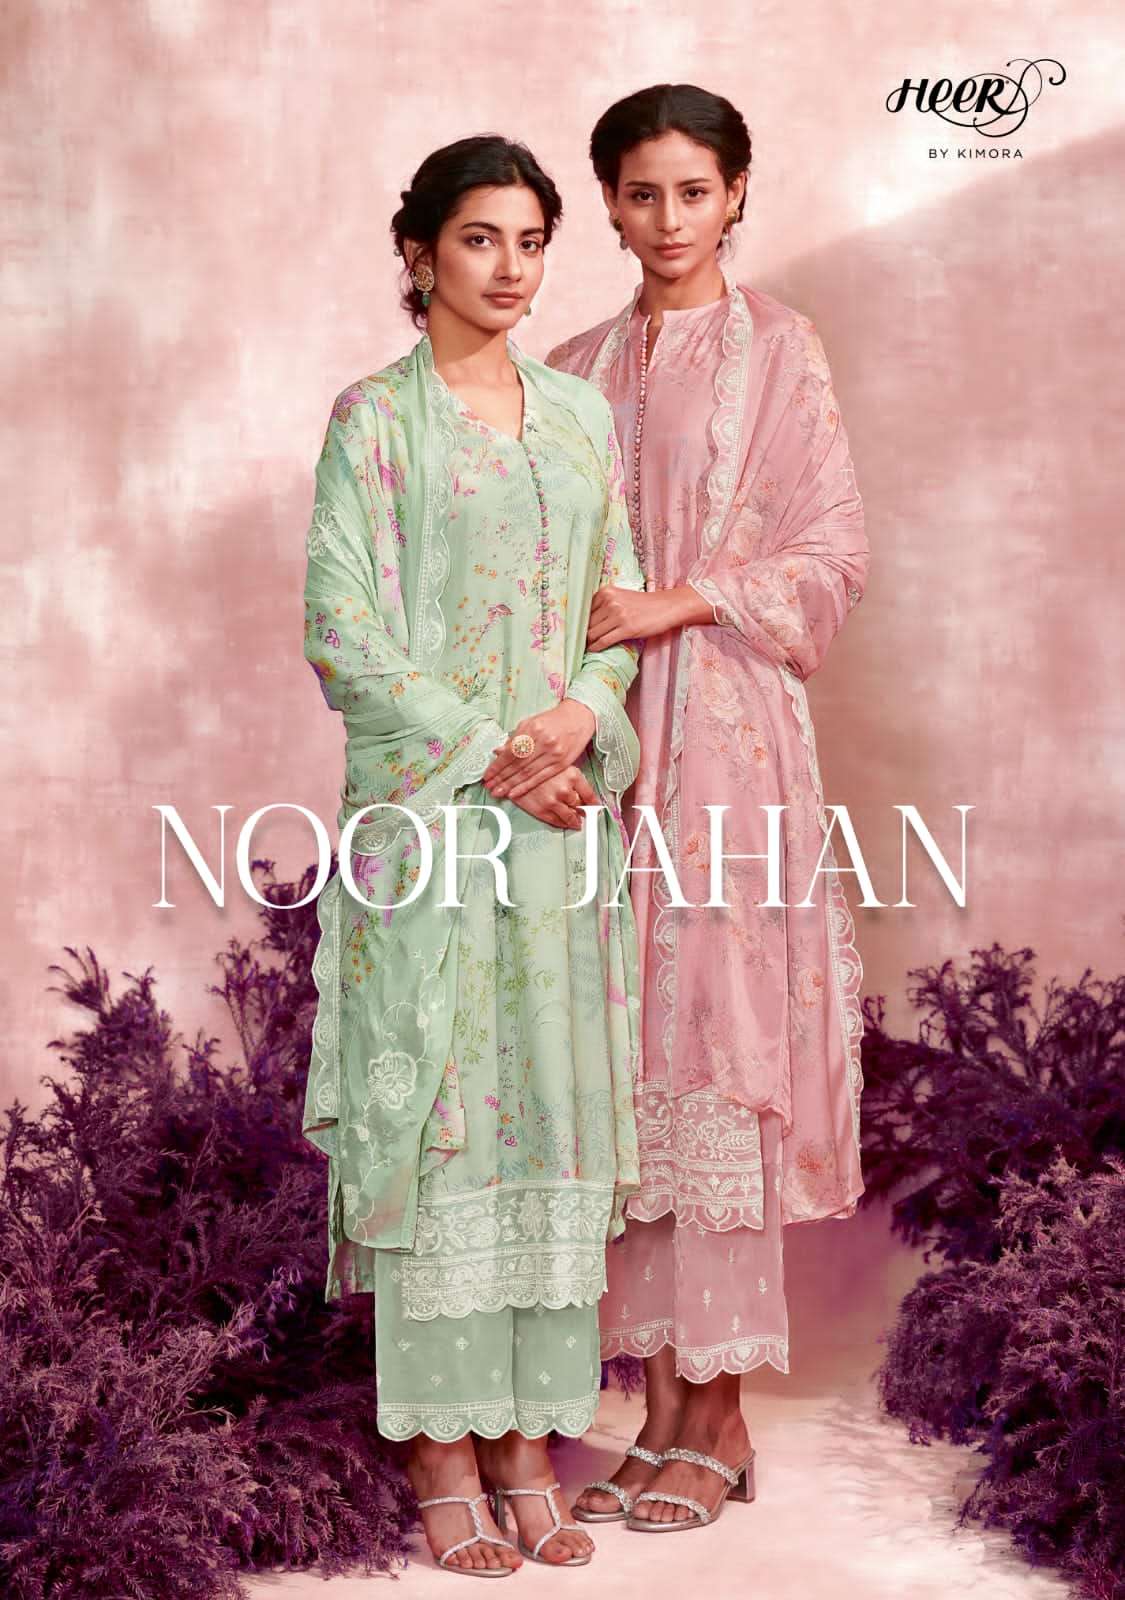 Noor Jahan by Kimora Heer 9101 to 9108